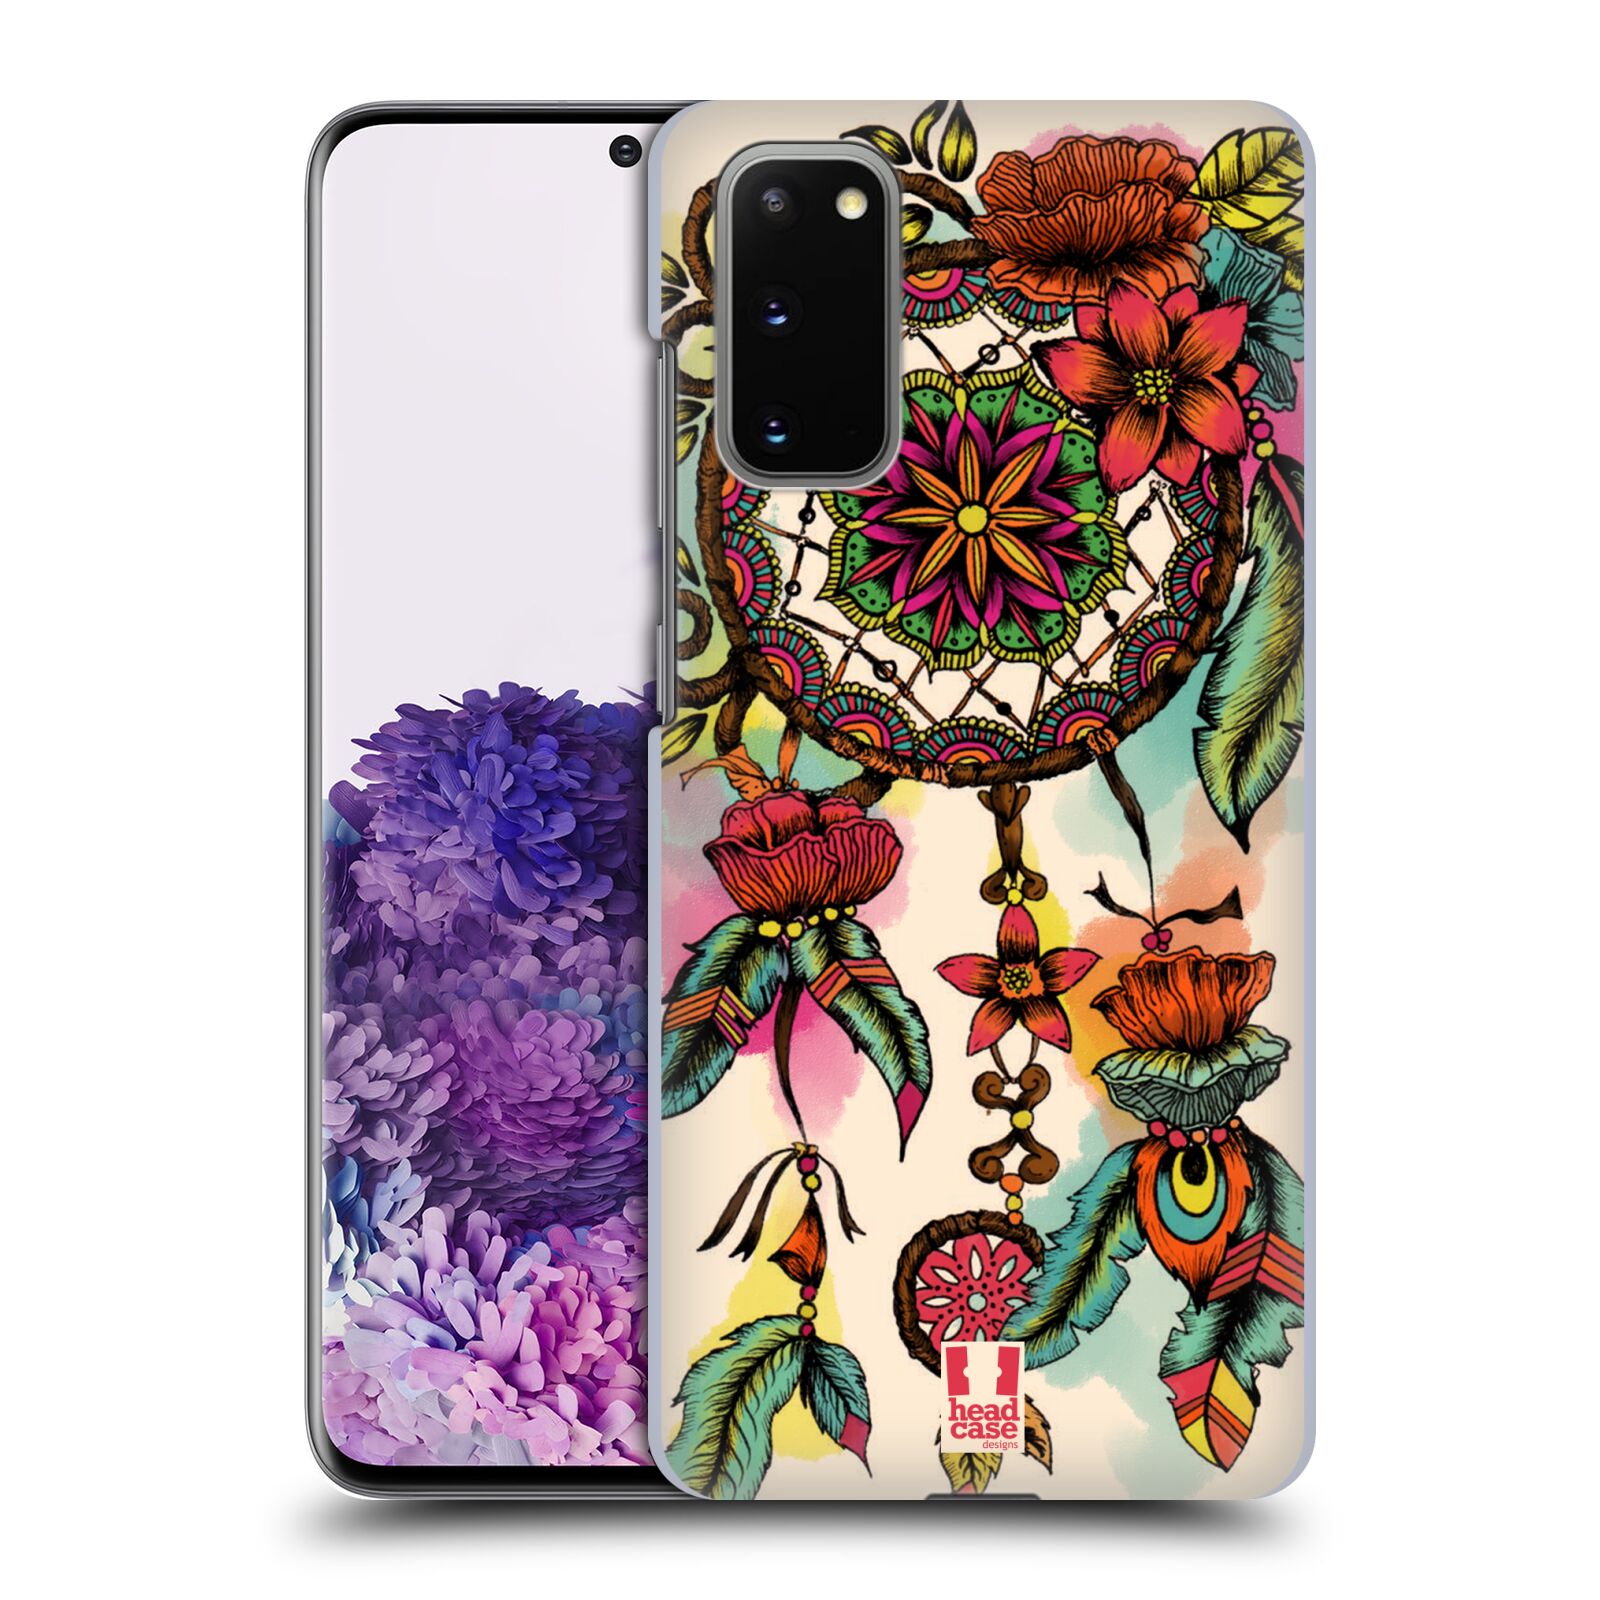 Pouzdro na mobil Samsung Galaxy S20 - HEAD CASE - vzor Květy lapač snů FLORID